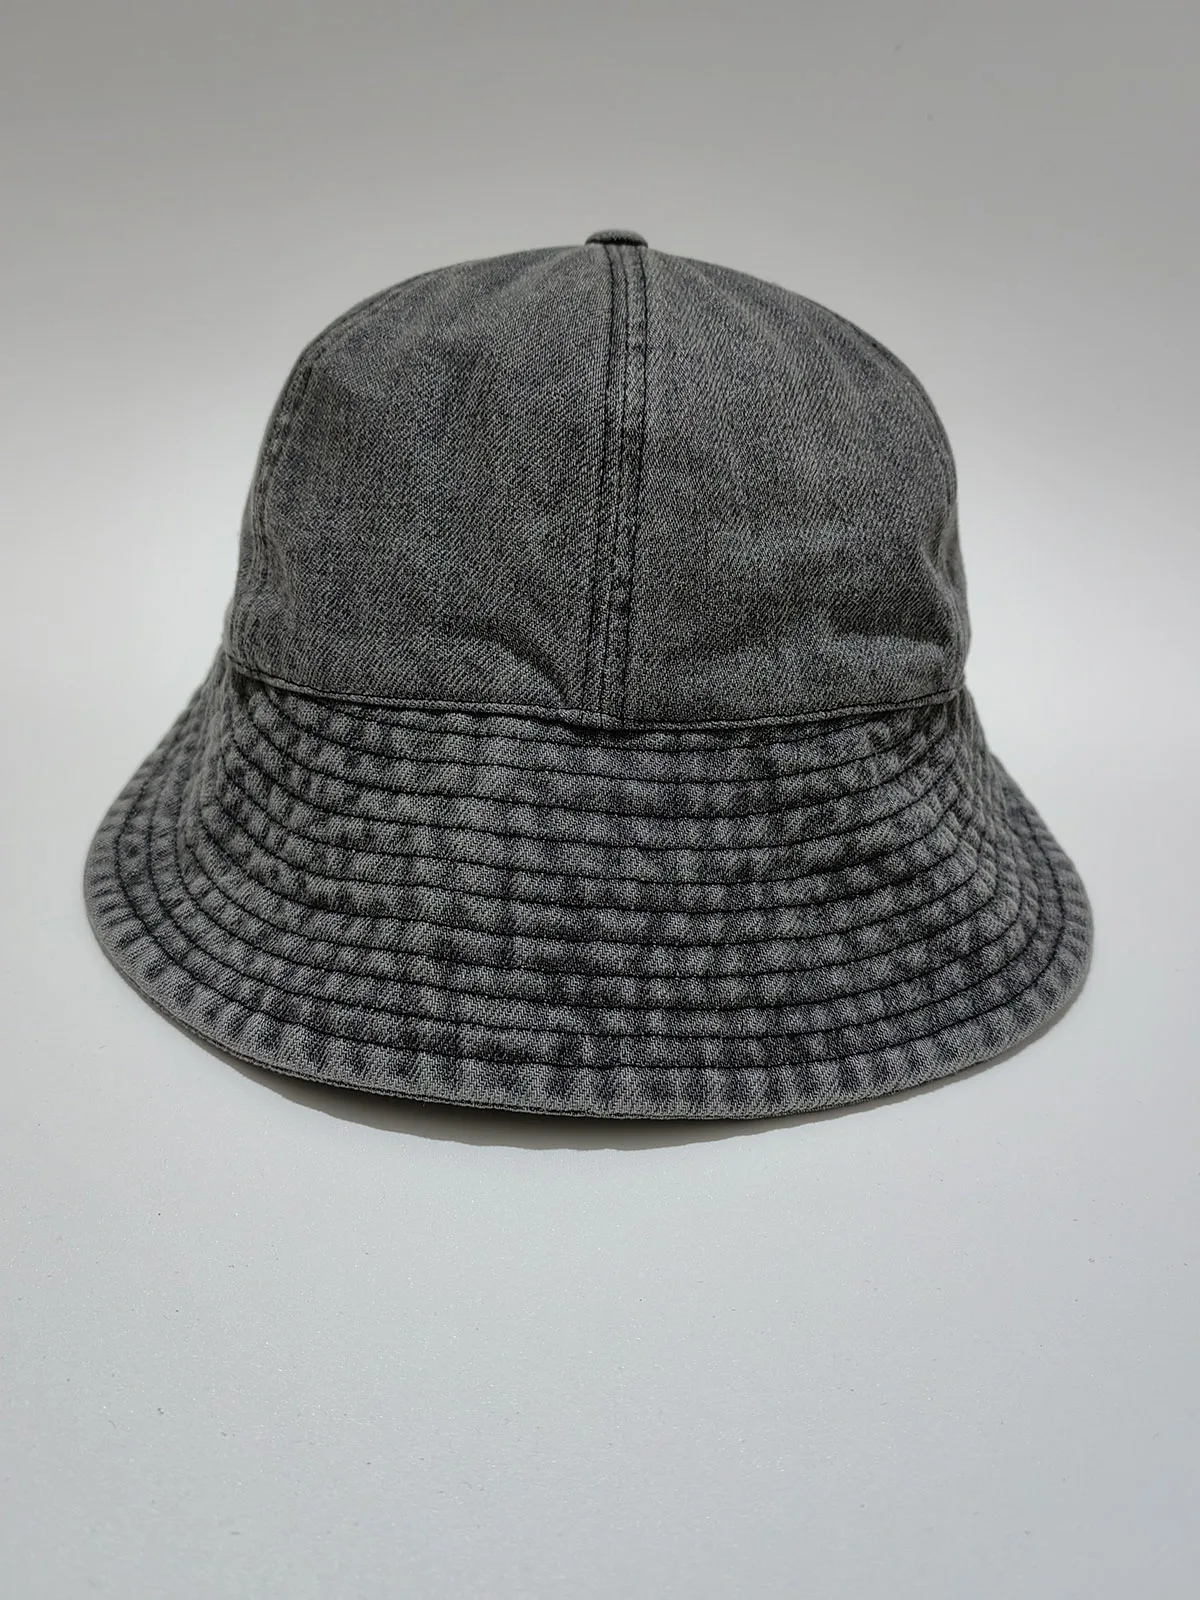 Fashion Bucket Hat For Men And Women Vintage Washed Cowboy Peaked Cap Spring Summer Fisherman Hat Soft Top Sun Visor Cap Unisex